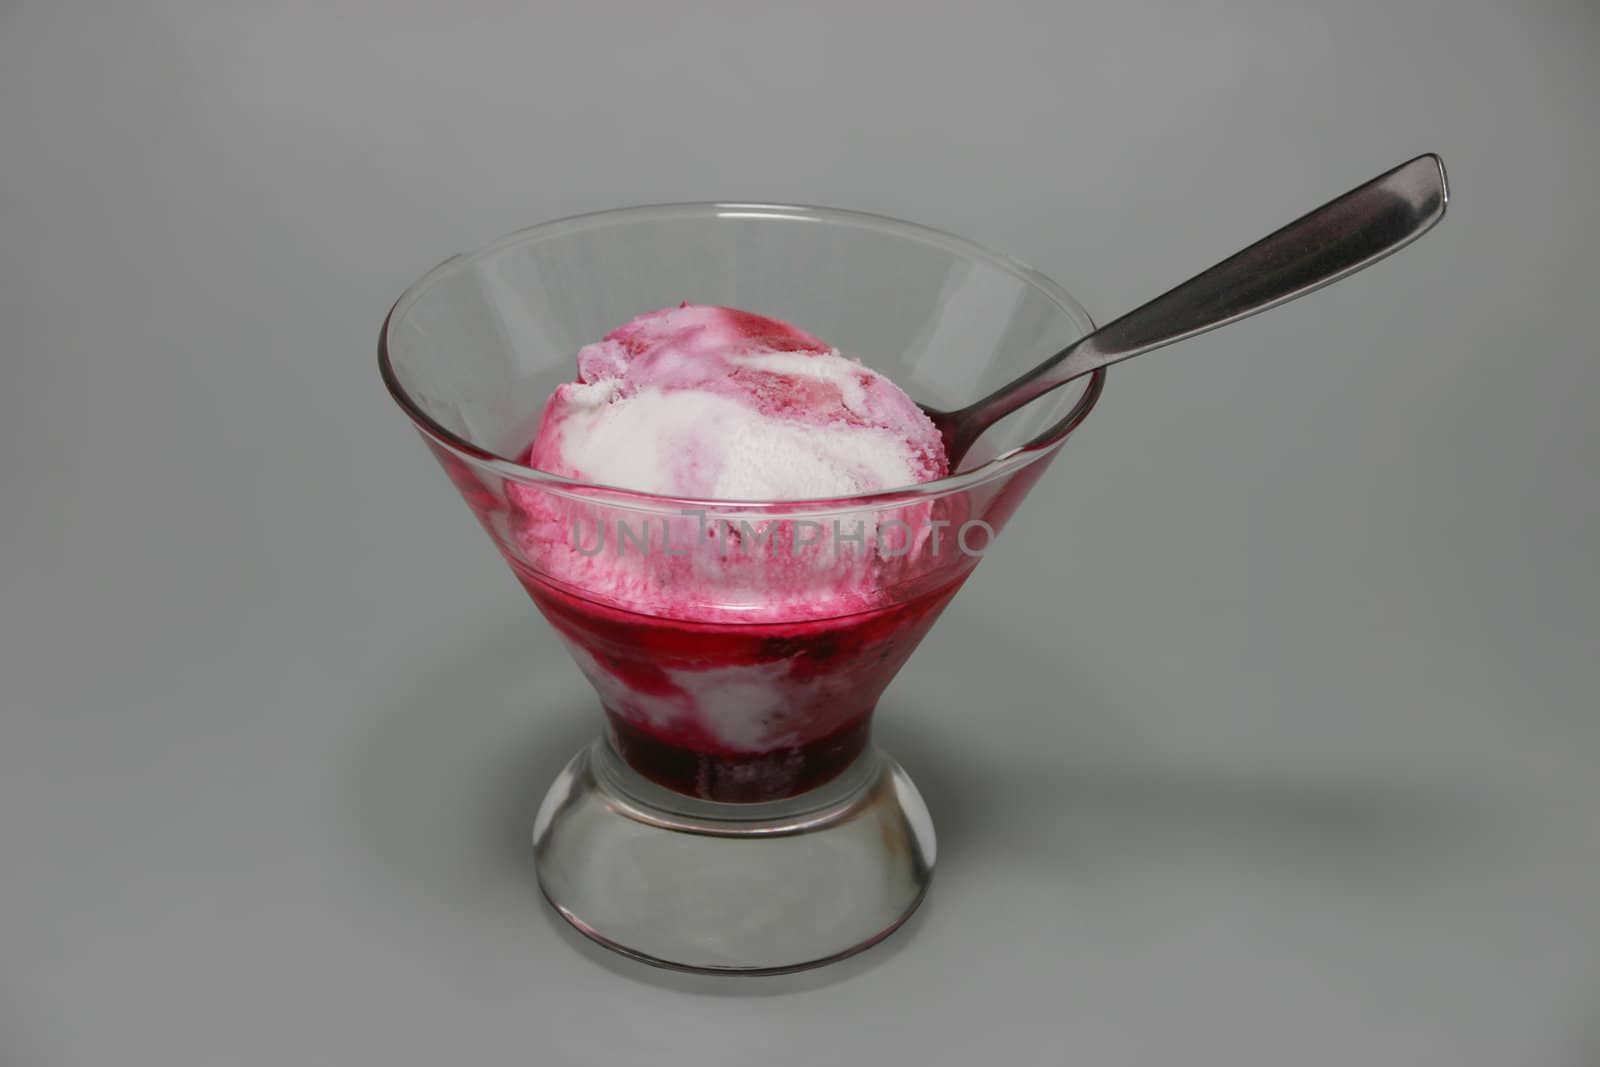 Ice cream with berry jam on grey background.